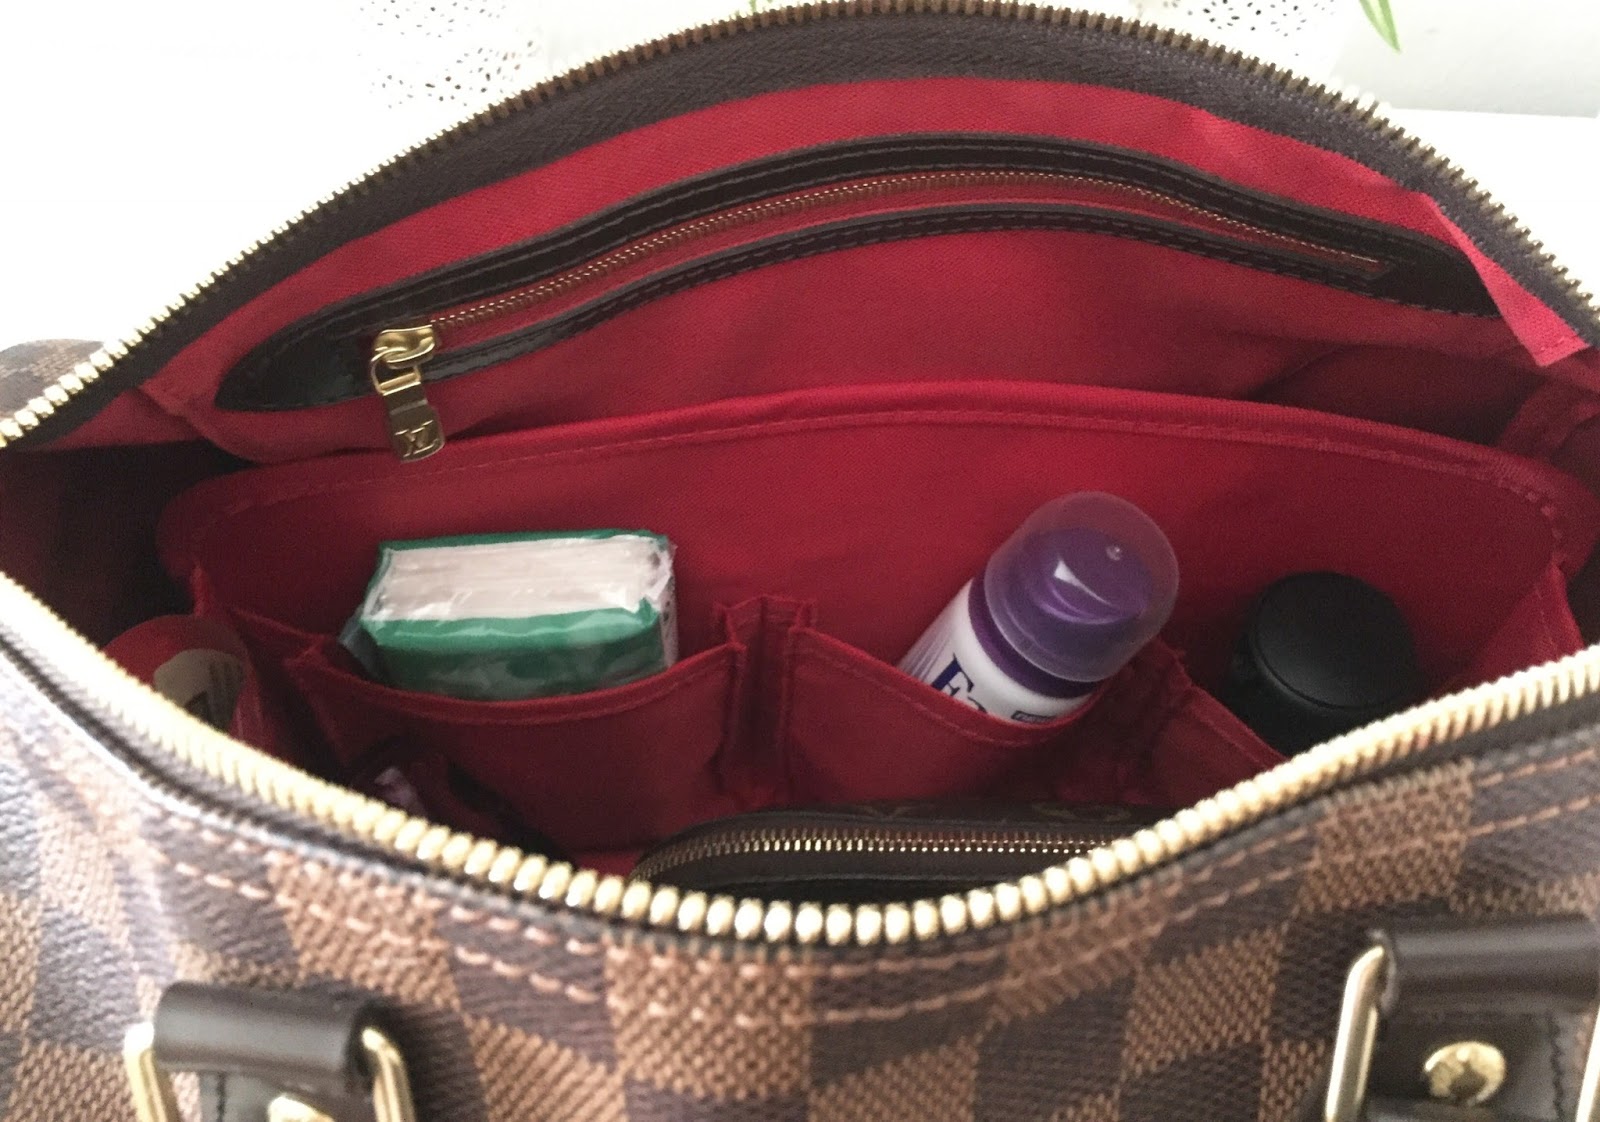 CloverSac Handbag Organizer + Base Shaper // REVIEW